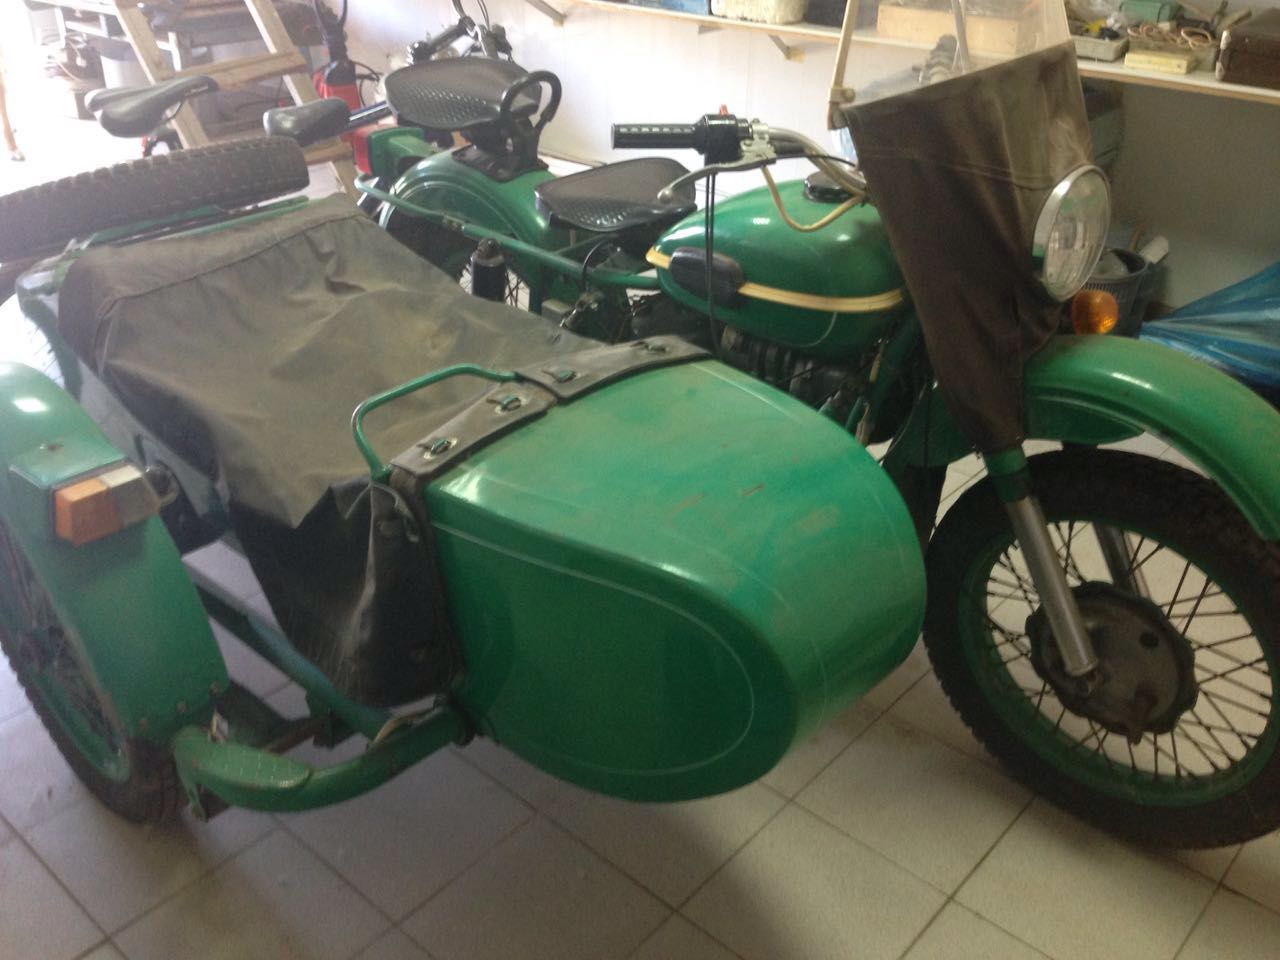 Урал зеленого цвета. Мотоцикл Урал зеленый. Мотоцикл Урал 108 зеленый. Мотоцикл Урал зеленый с коляской. Мотоцикл Урал темно зеленый.